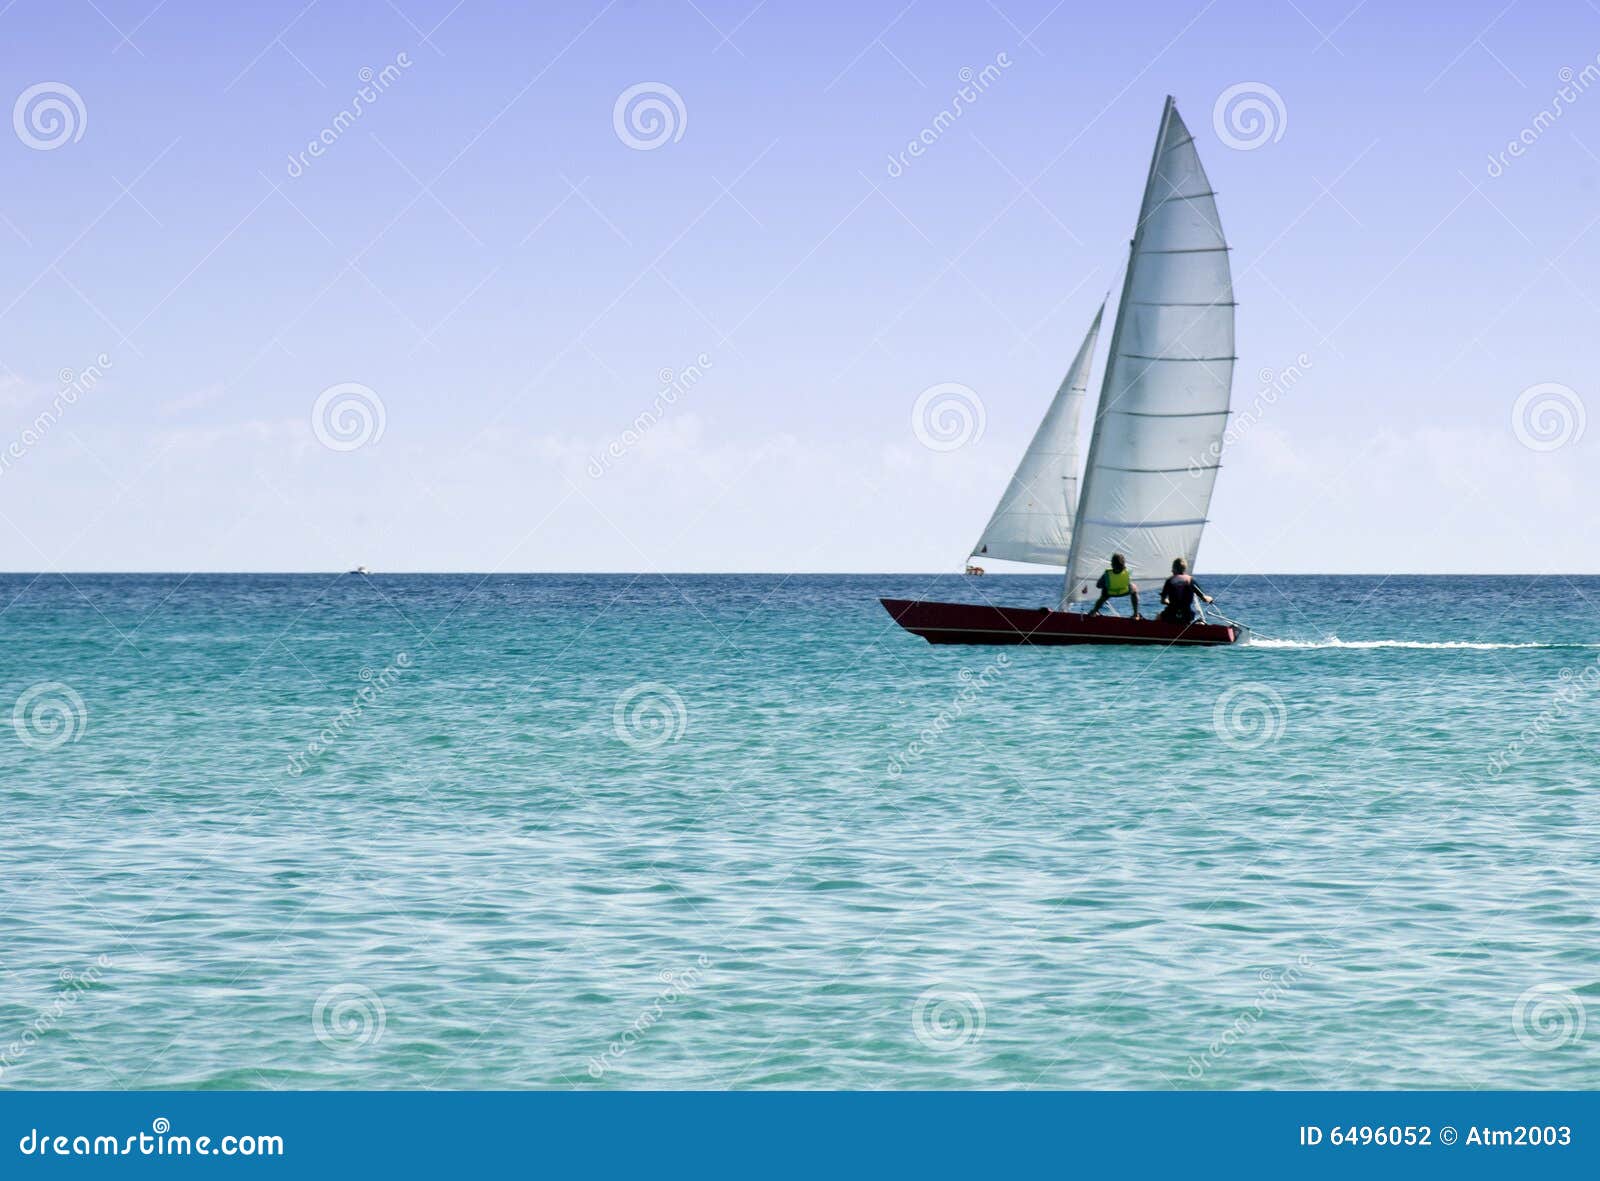 Rowing Sailing Boat Stock Photography - Image: 6496052